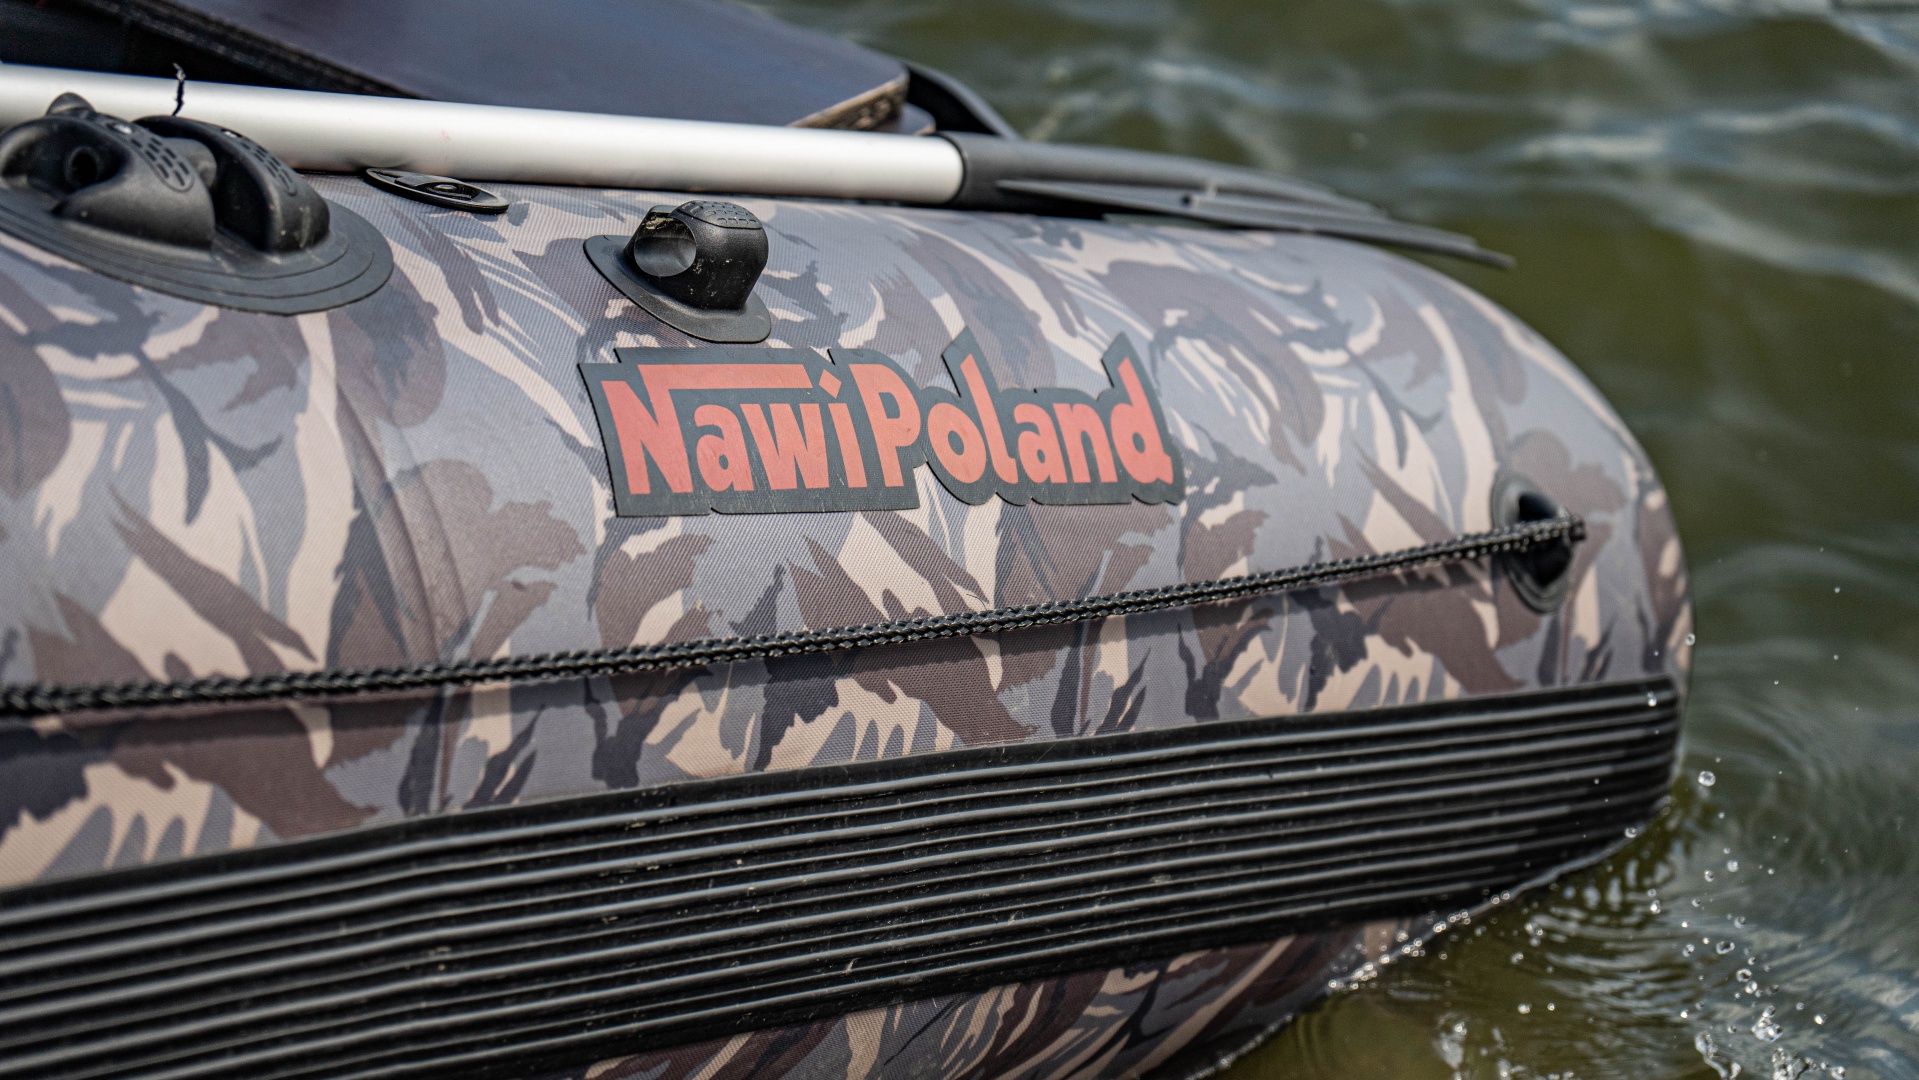 NawiPoland CAT 280 Inflatable Boat  - Catamarano